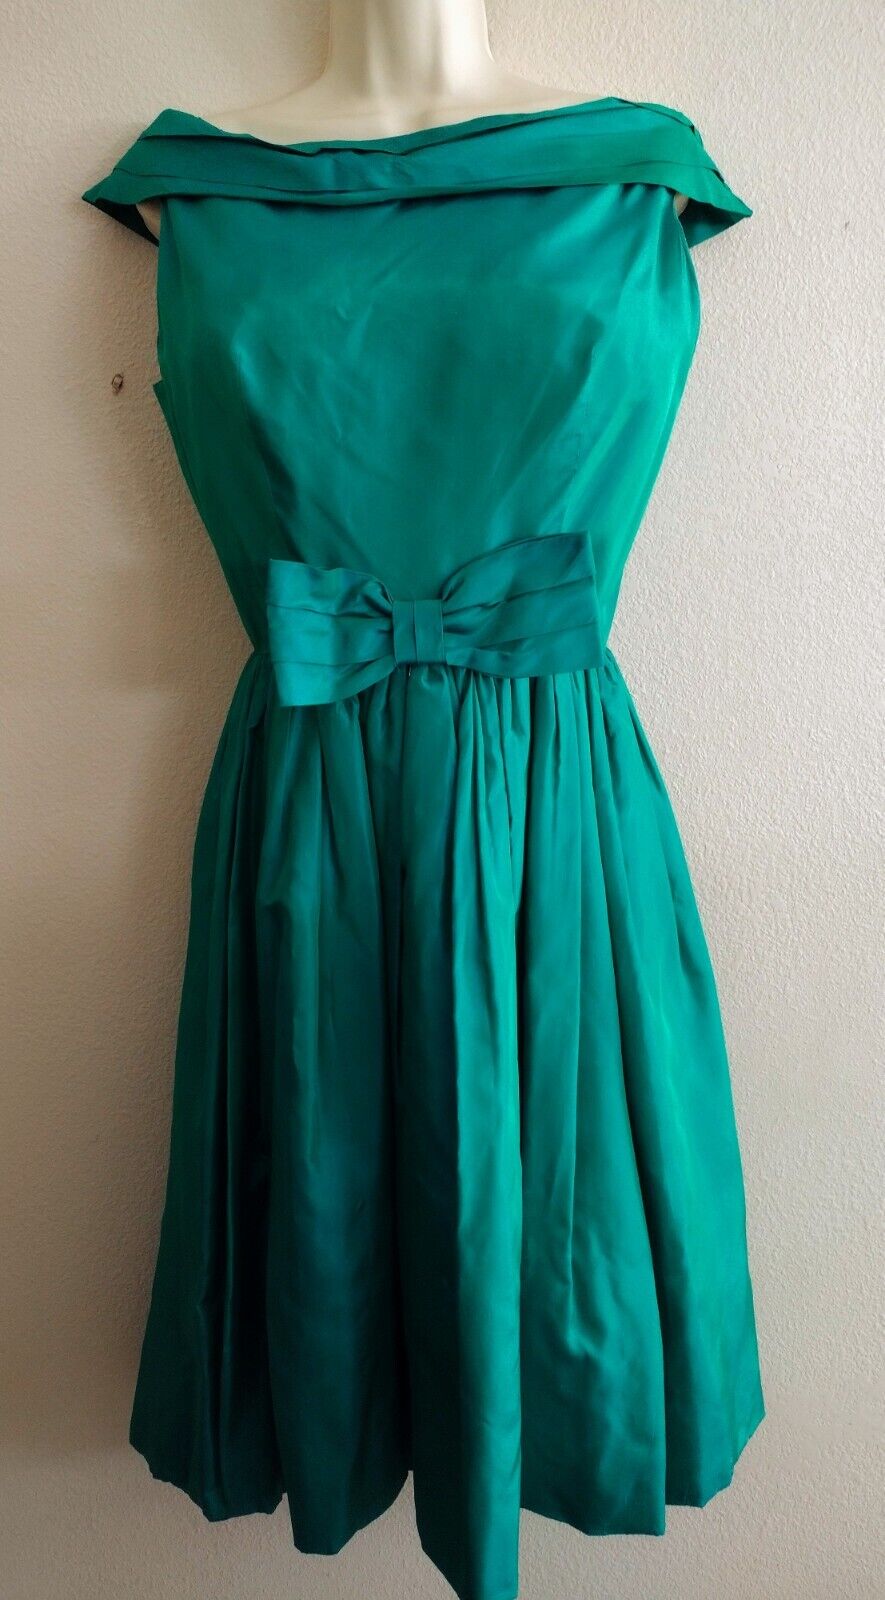 Vintage 1950s Green Silk Taffeta Cocktail Dress - image 1